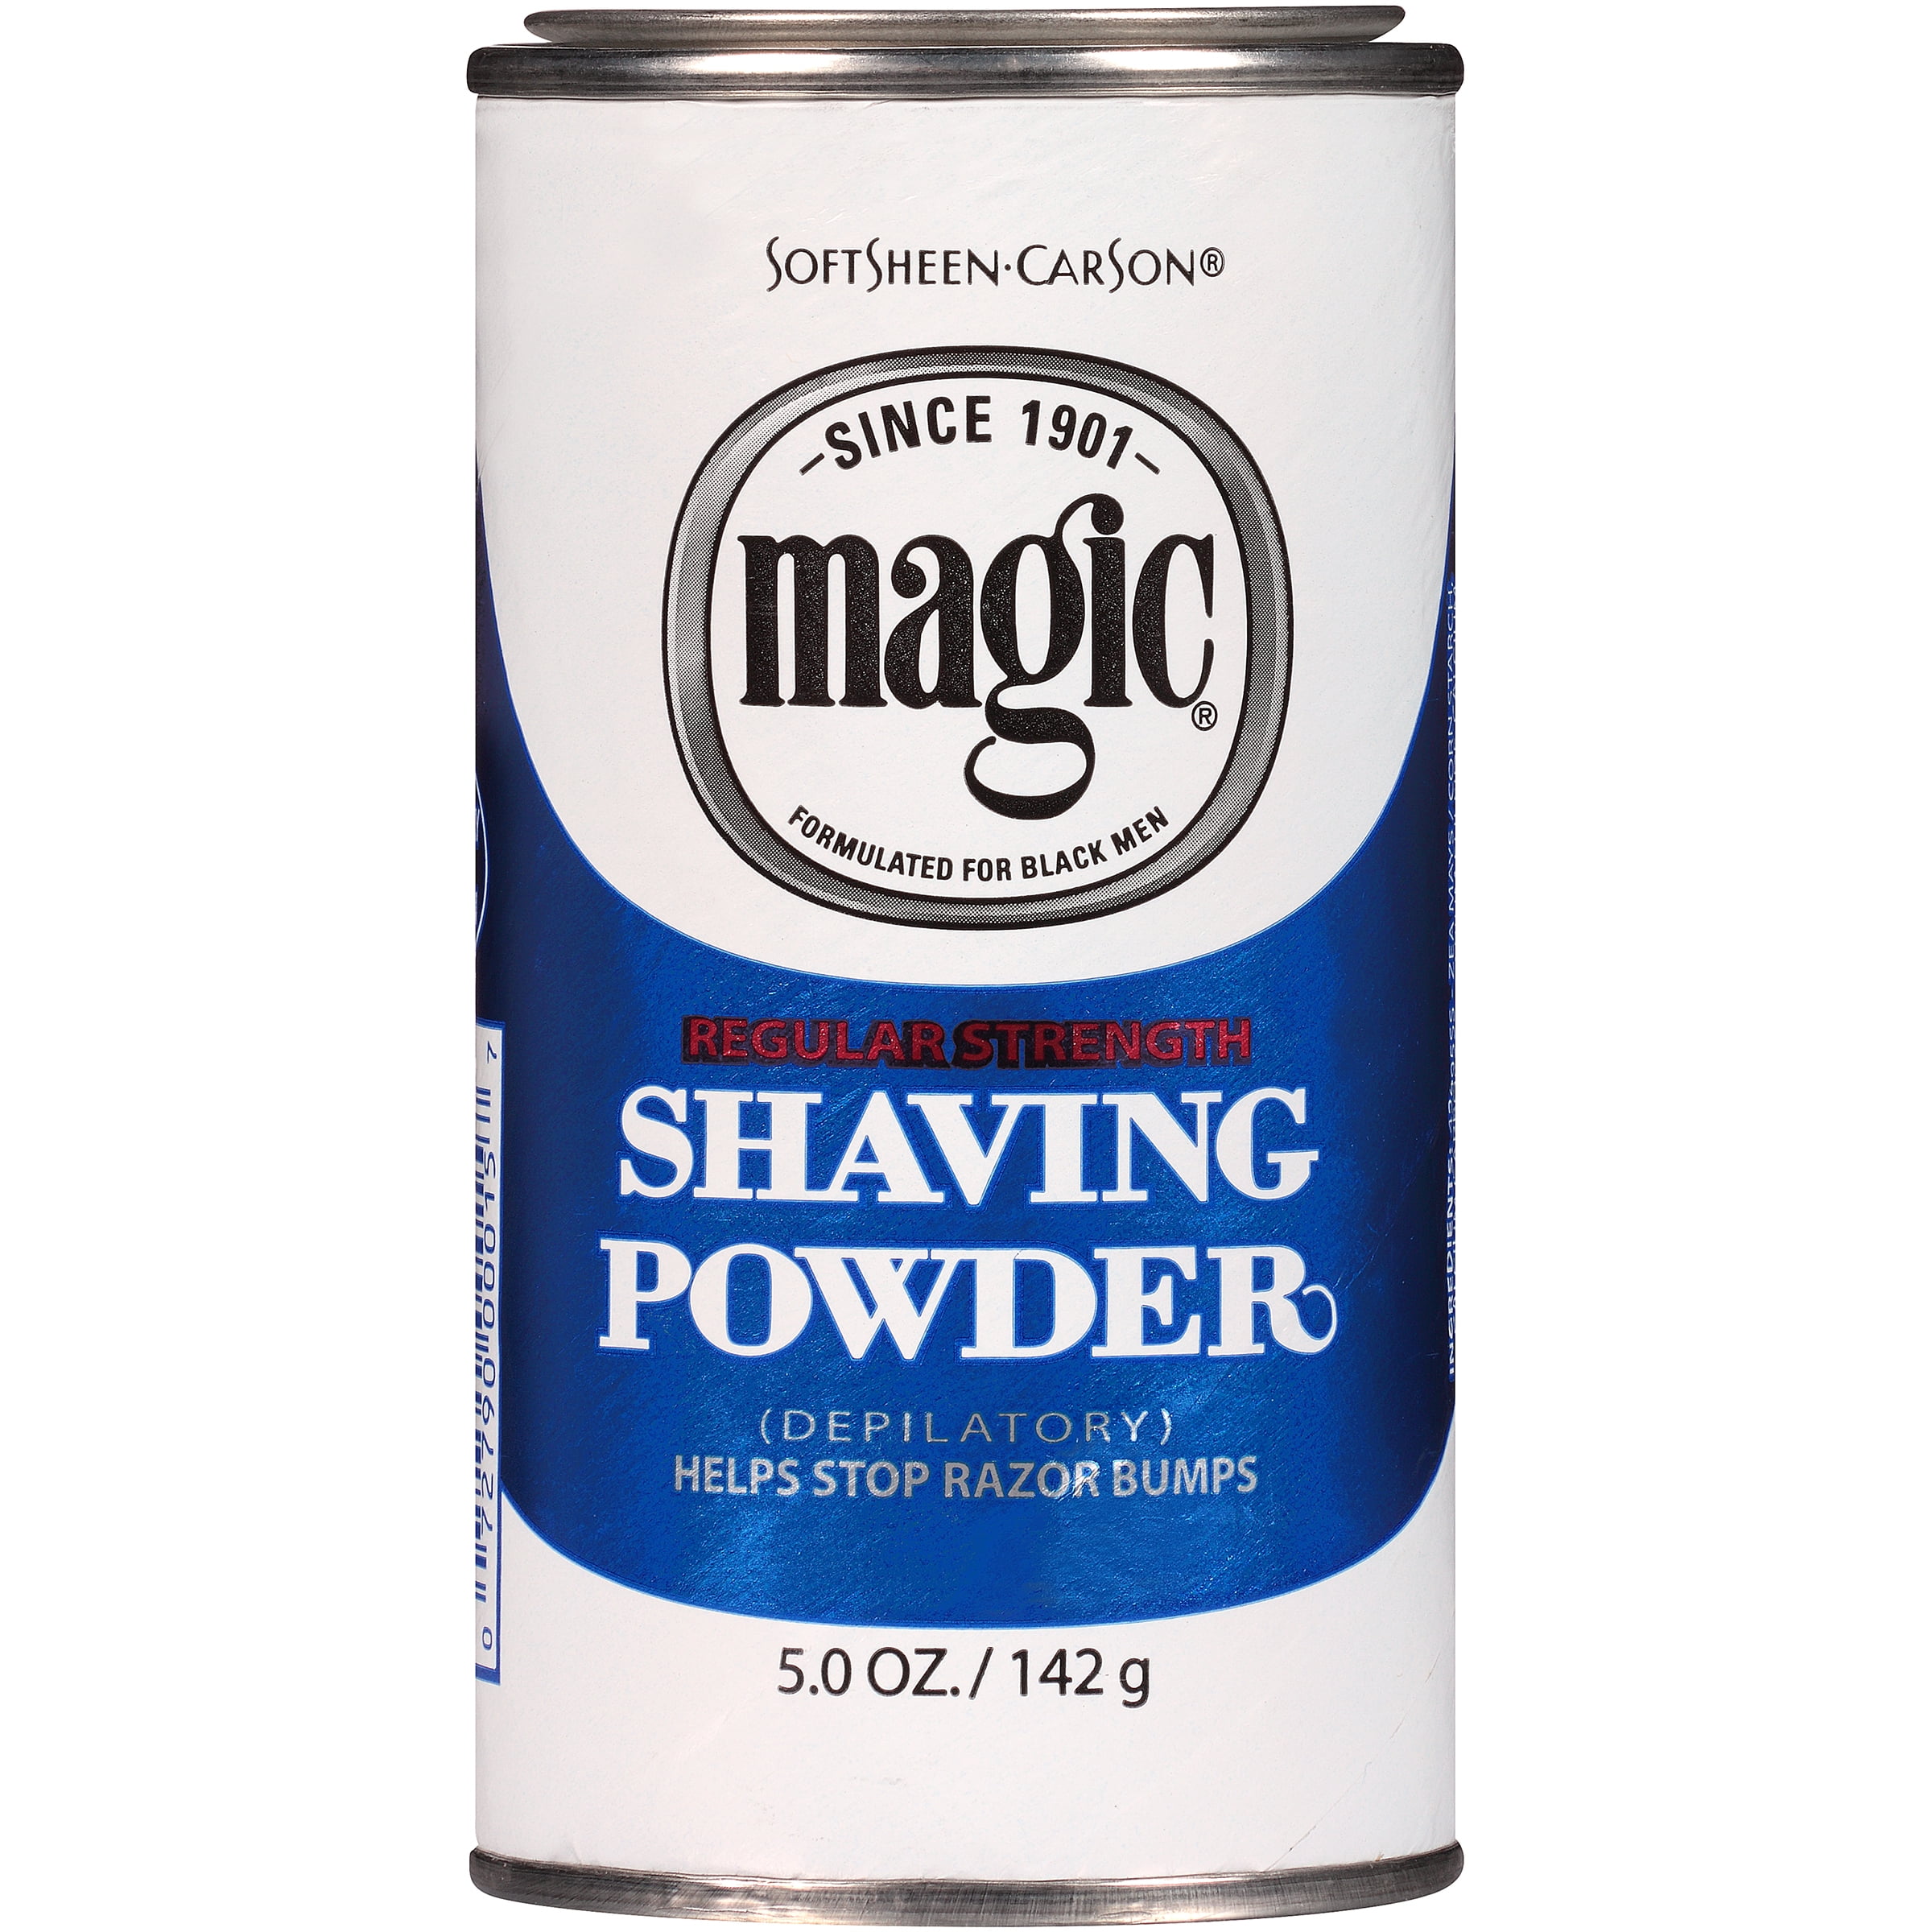 Softsheen-Carson Magic Regular Strength Shaving Powder, For Coarse Hair,  Depilatory, 5 Oz. 